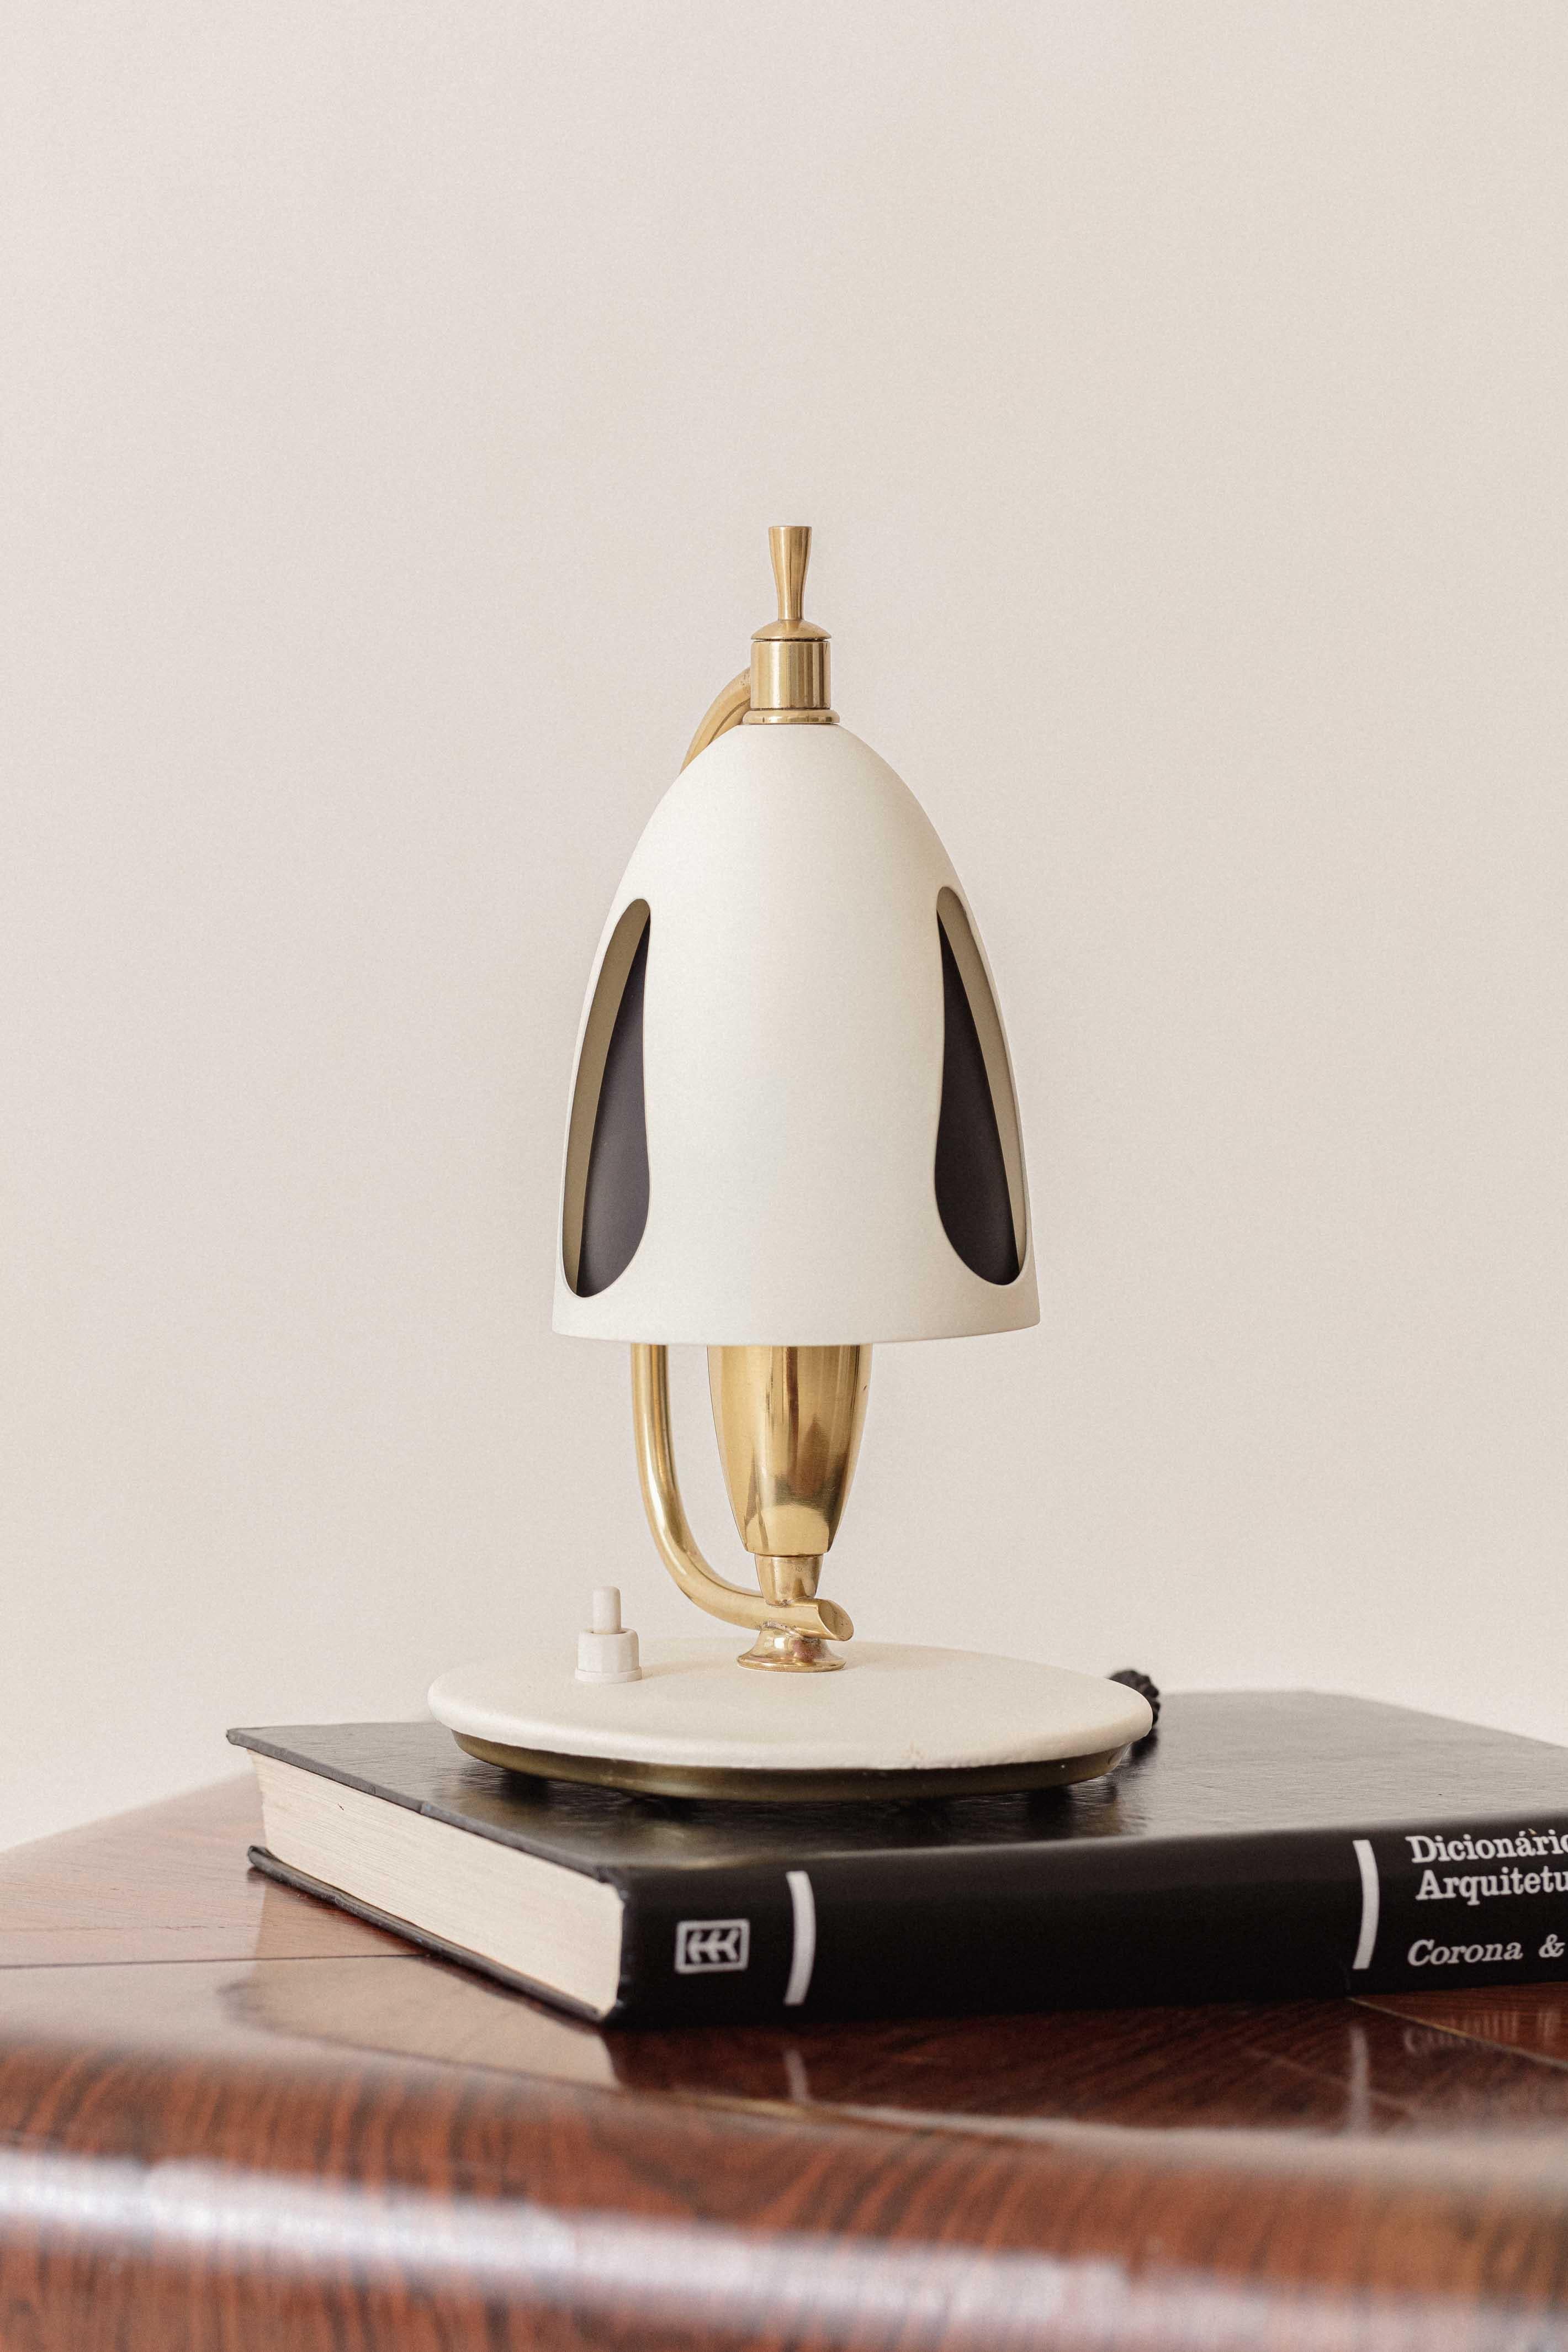 Midcentury Bedside Table Lamp, Brazilian Company Carlo Montalto & Filhos, 1950s For Sale 3